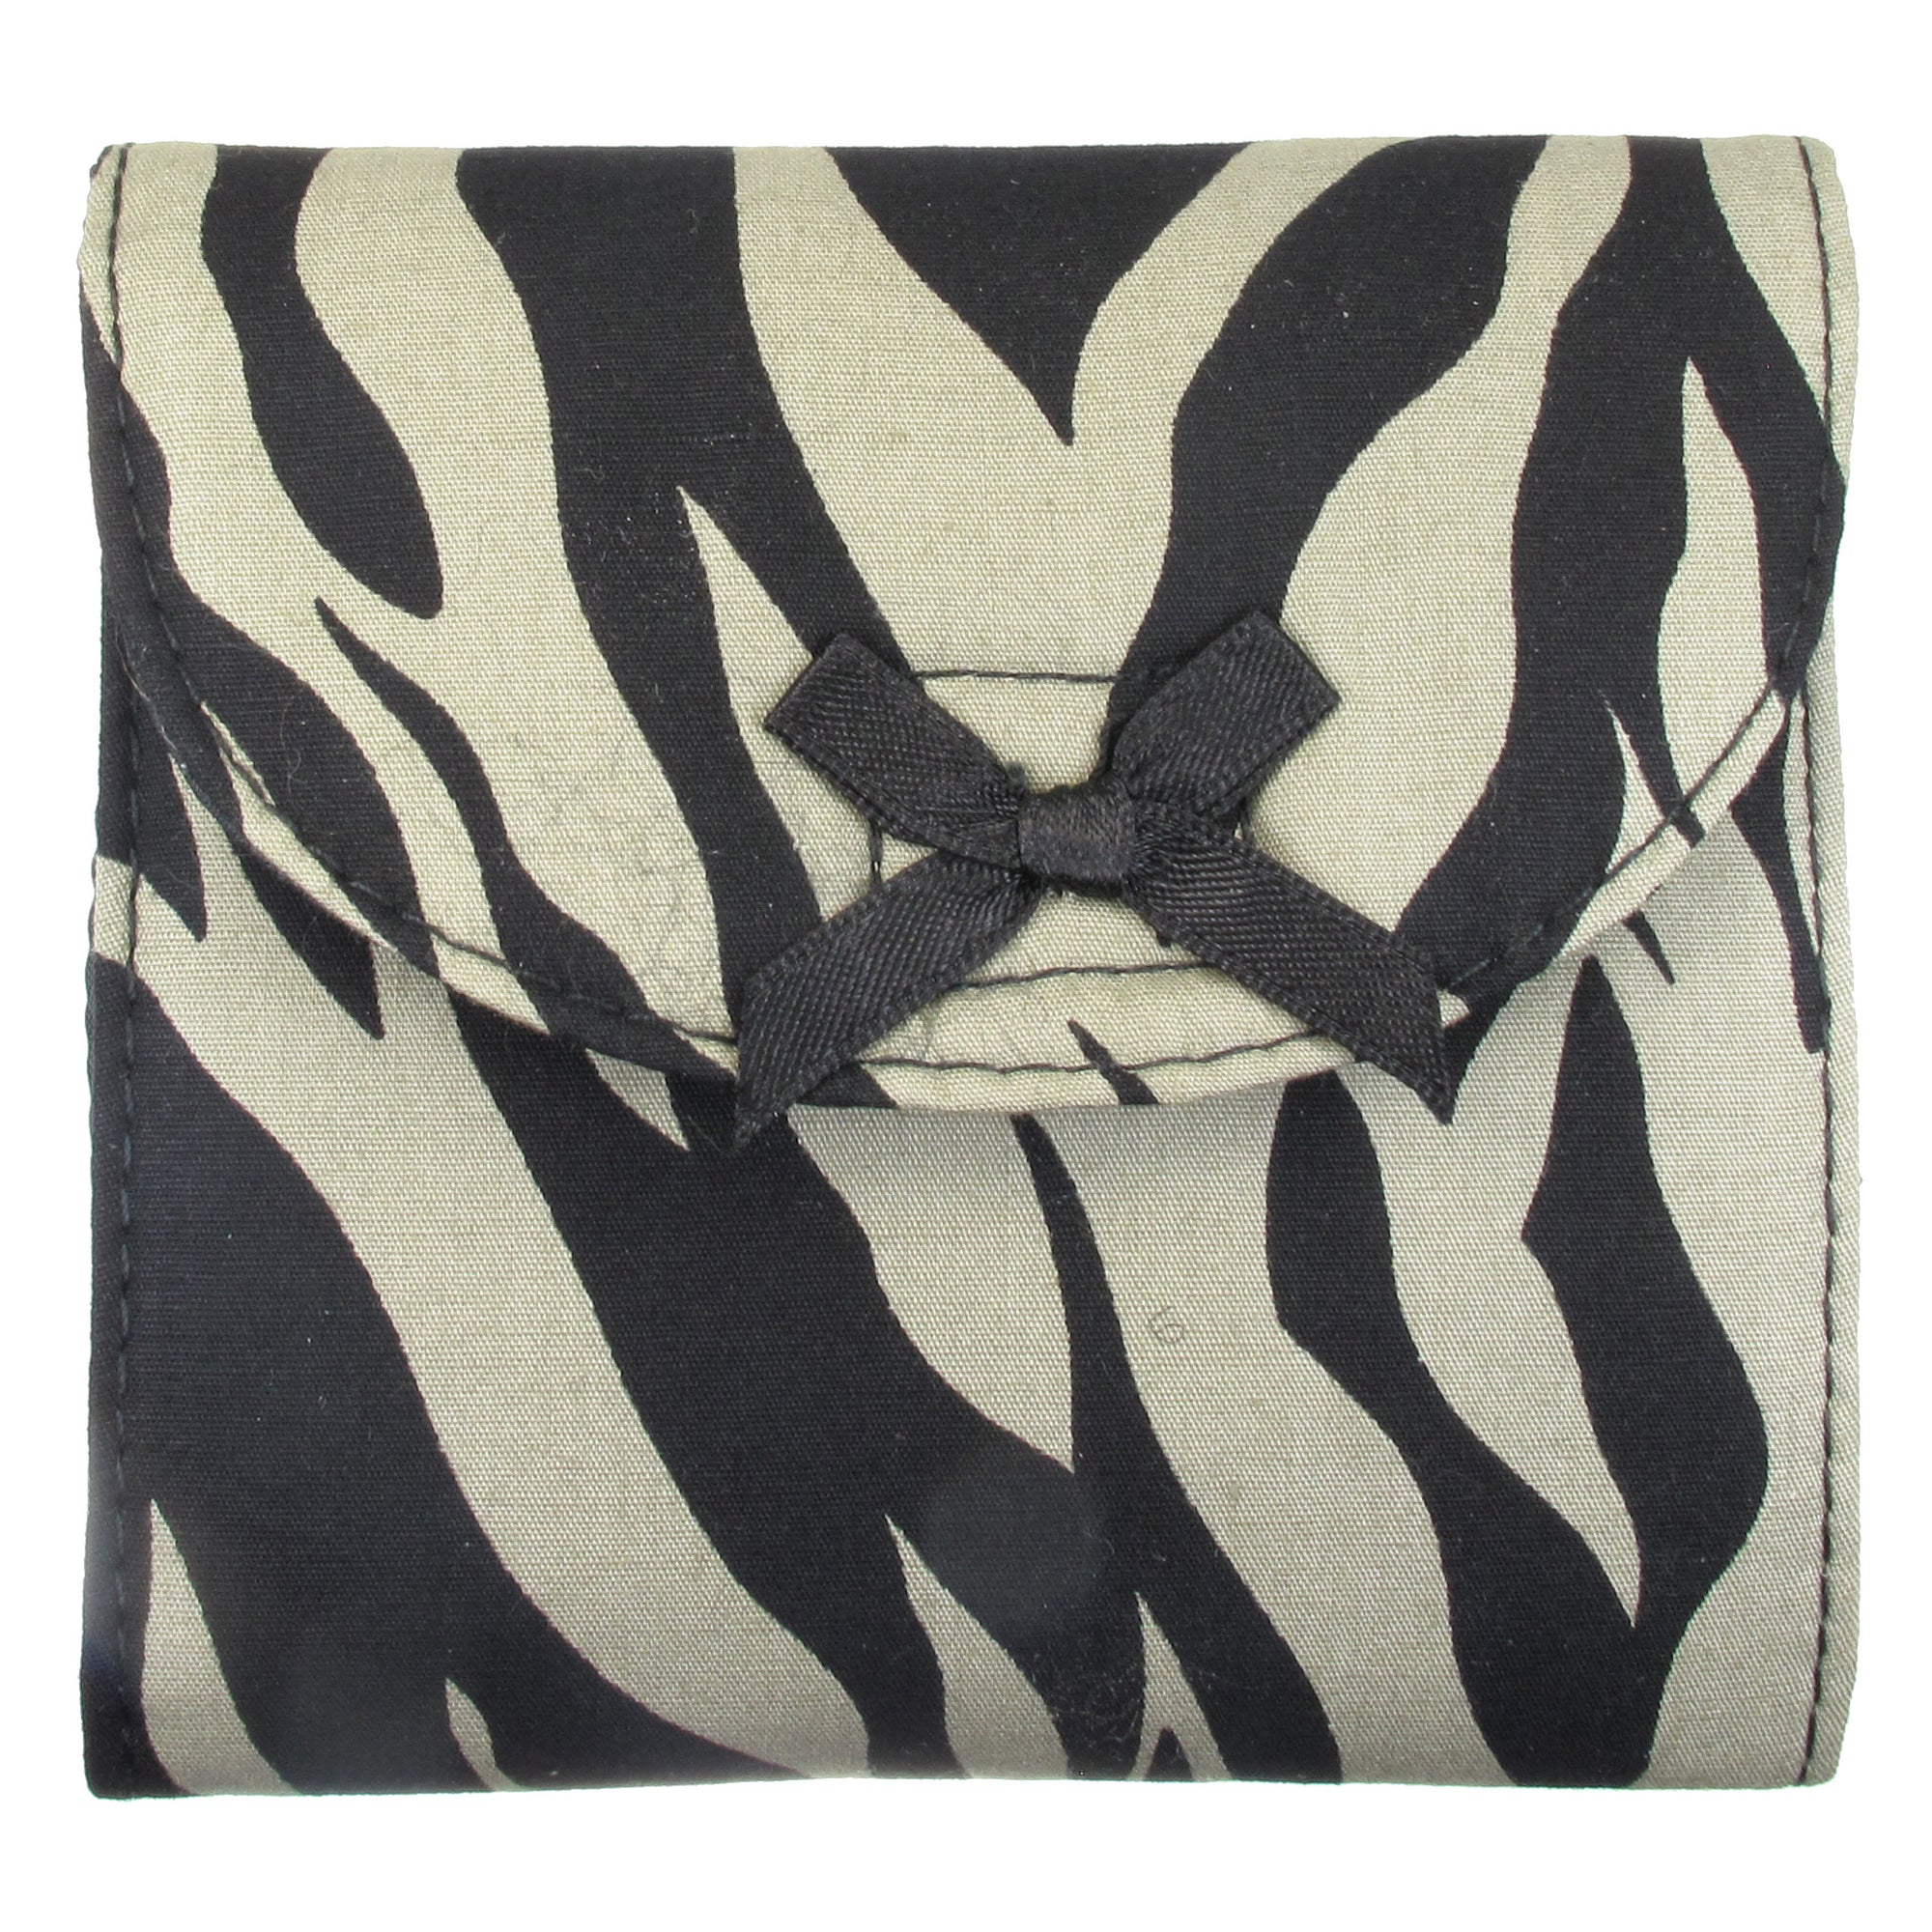 Sanitary Napkin (Sanitary Pad) Case (Bag, Pouch, Holder), Cotton Fabric, Small, Zebra Print